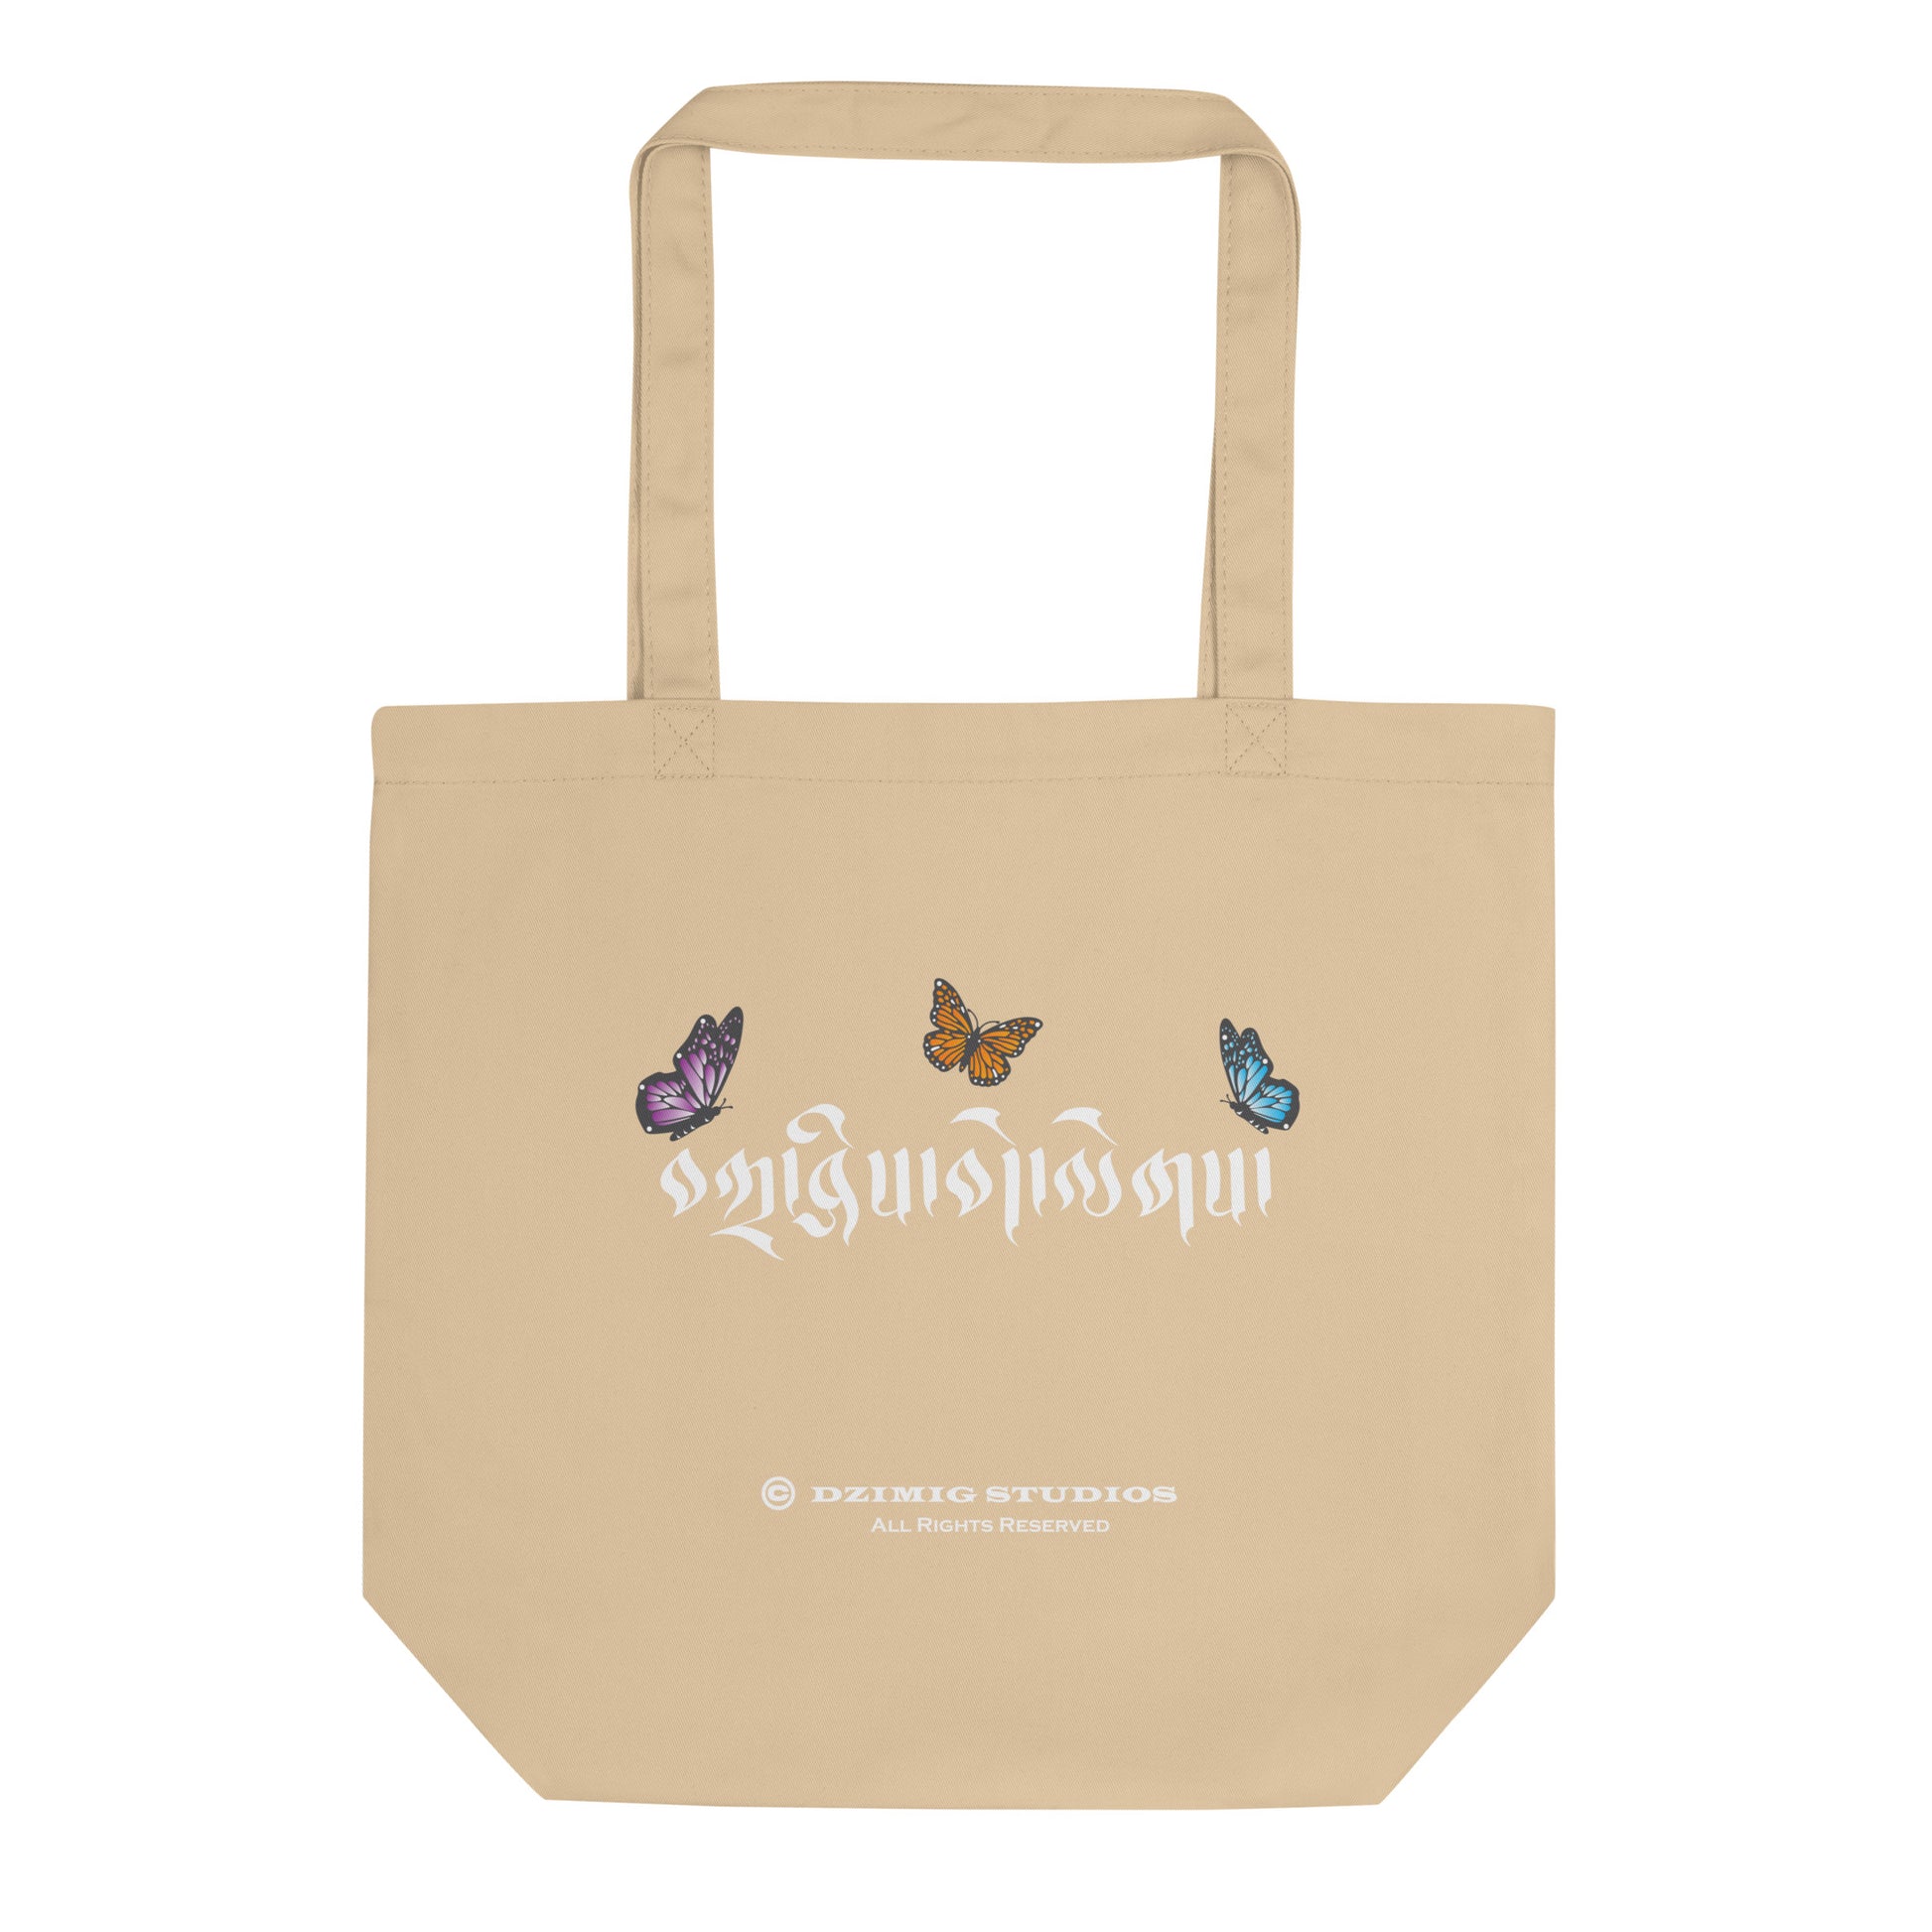 Tibetan calligraphy tote bag - Tashi delek Tibetan tote bag - butterfly printed tote bag